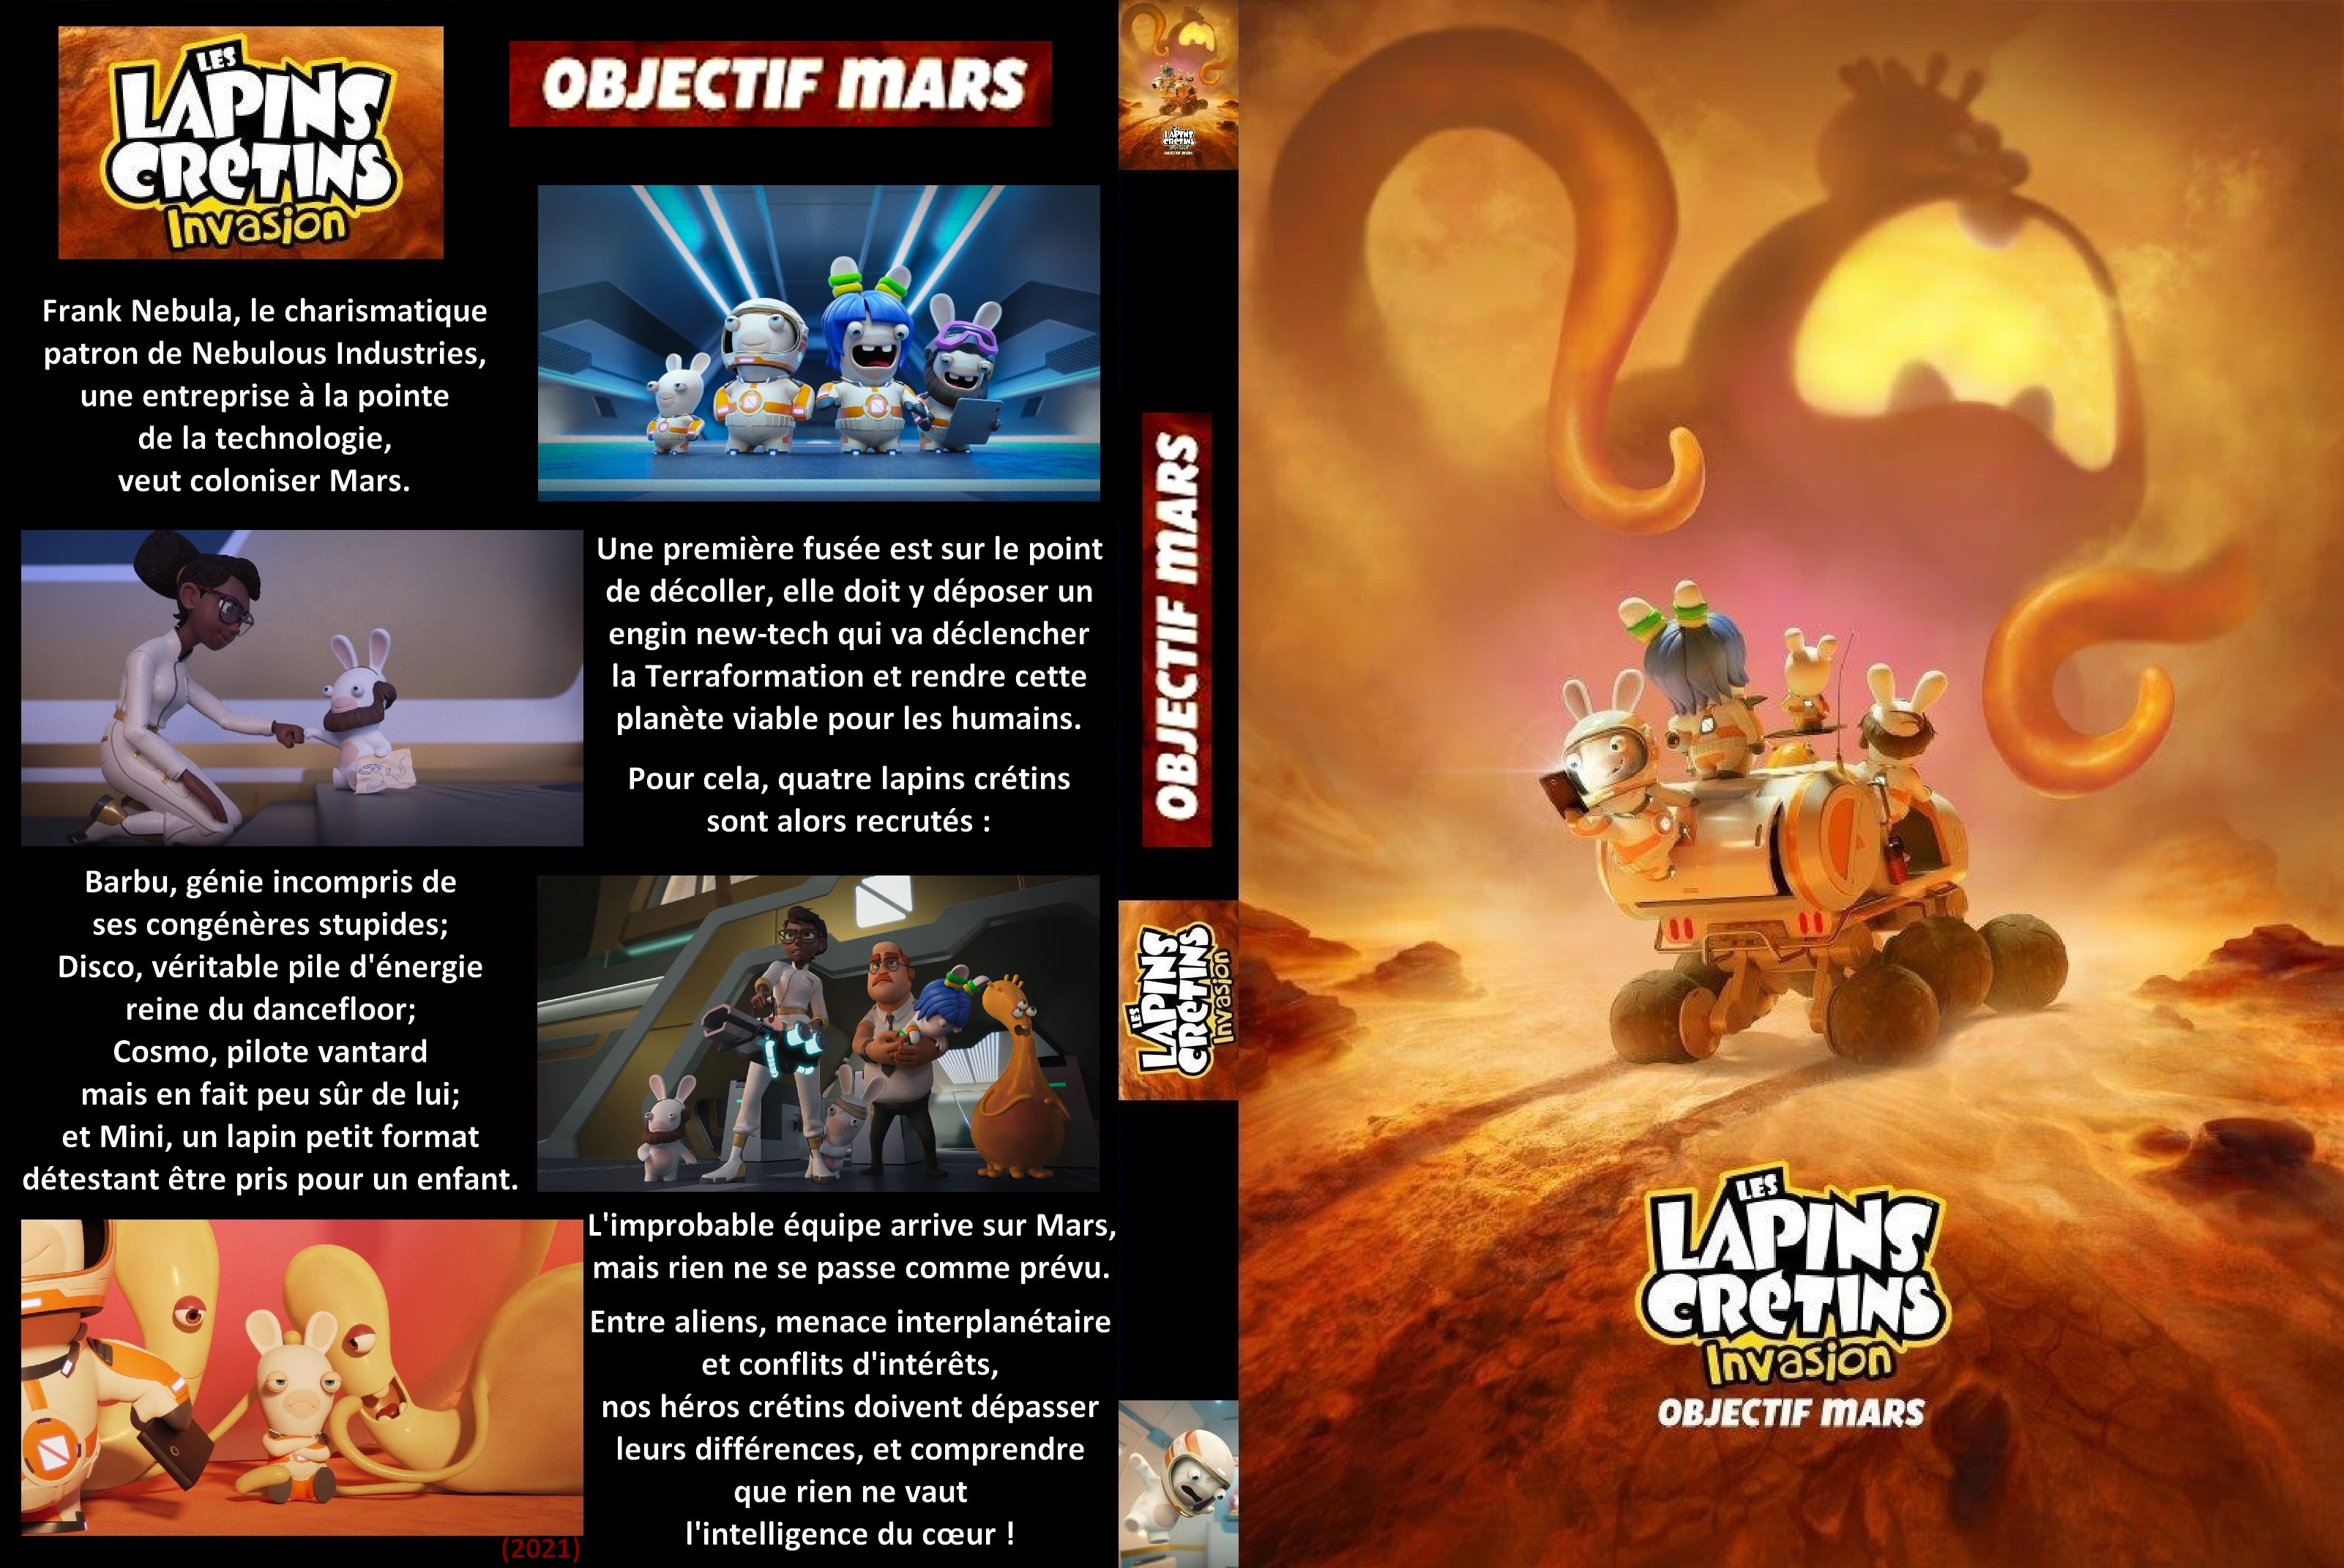 Jaquette DVD Les Lapins Cretins Invasion - Objectif Mars custom v2